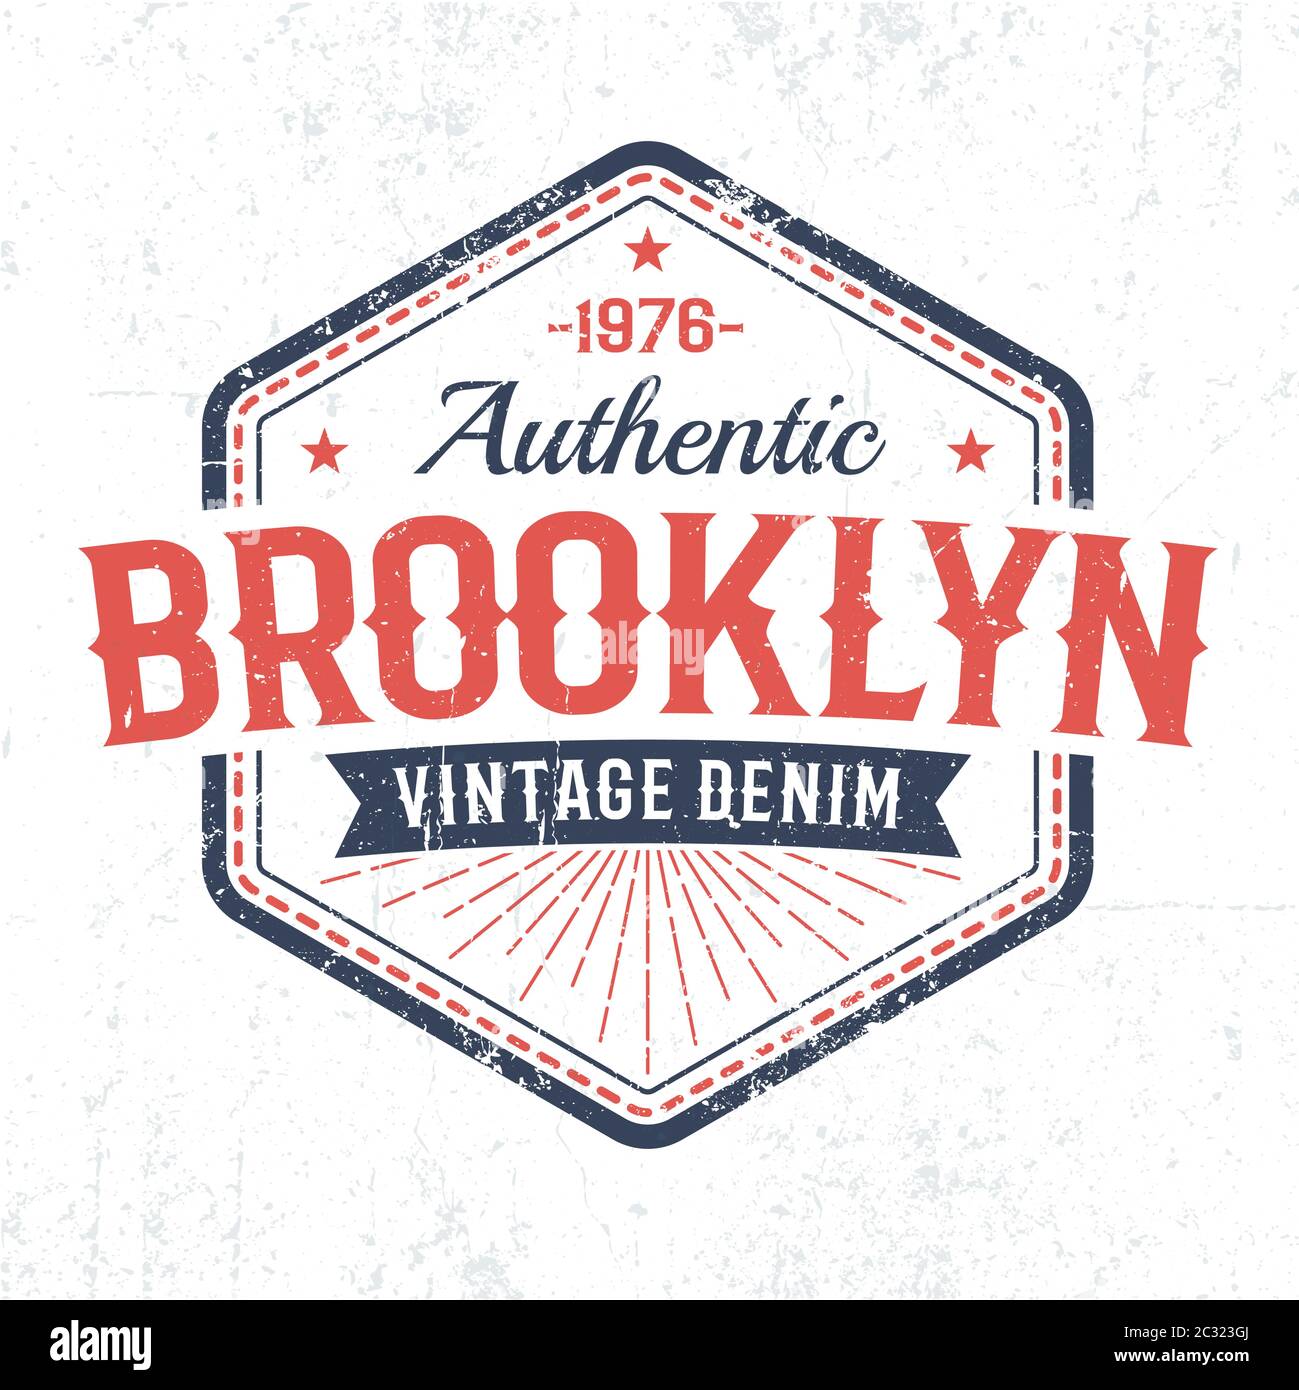 Brooklyn authentic vintage emblem Stock Vector